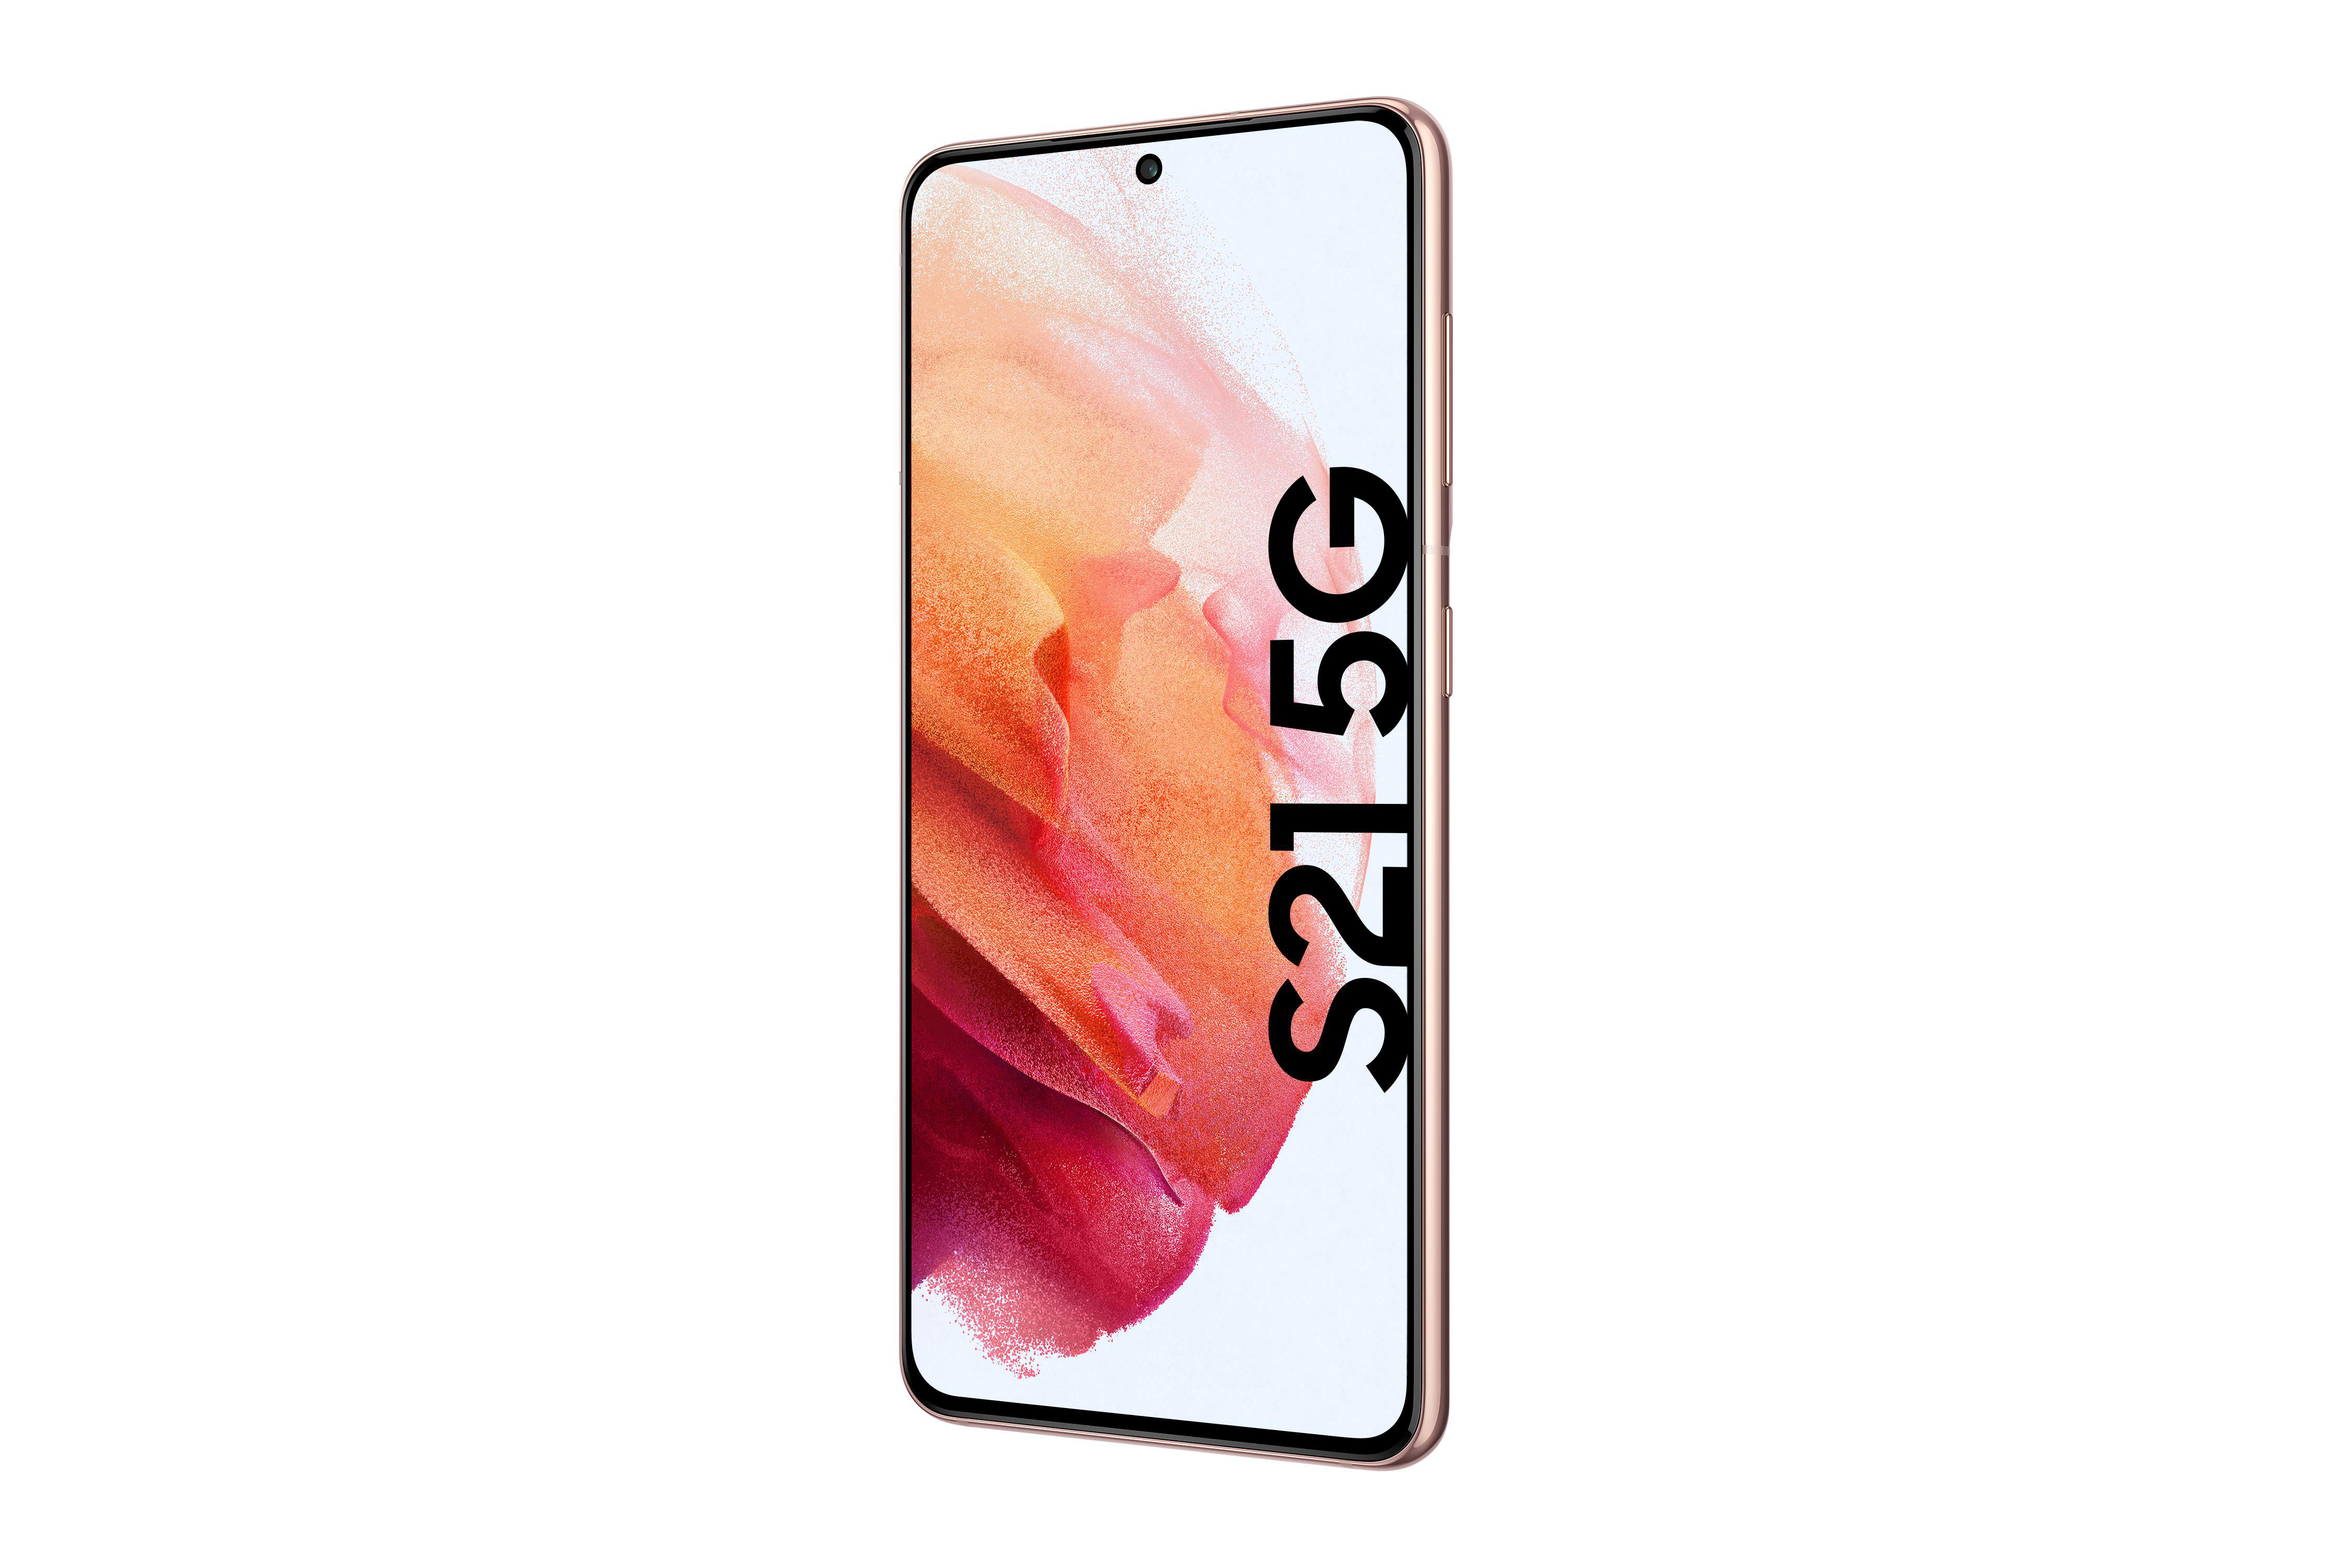 SAMSUNG Galaxy S21 5G Dual SIM Phantom Pink GB 256